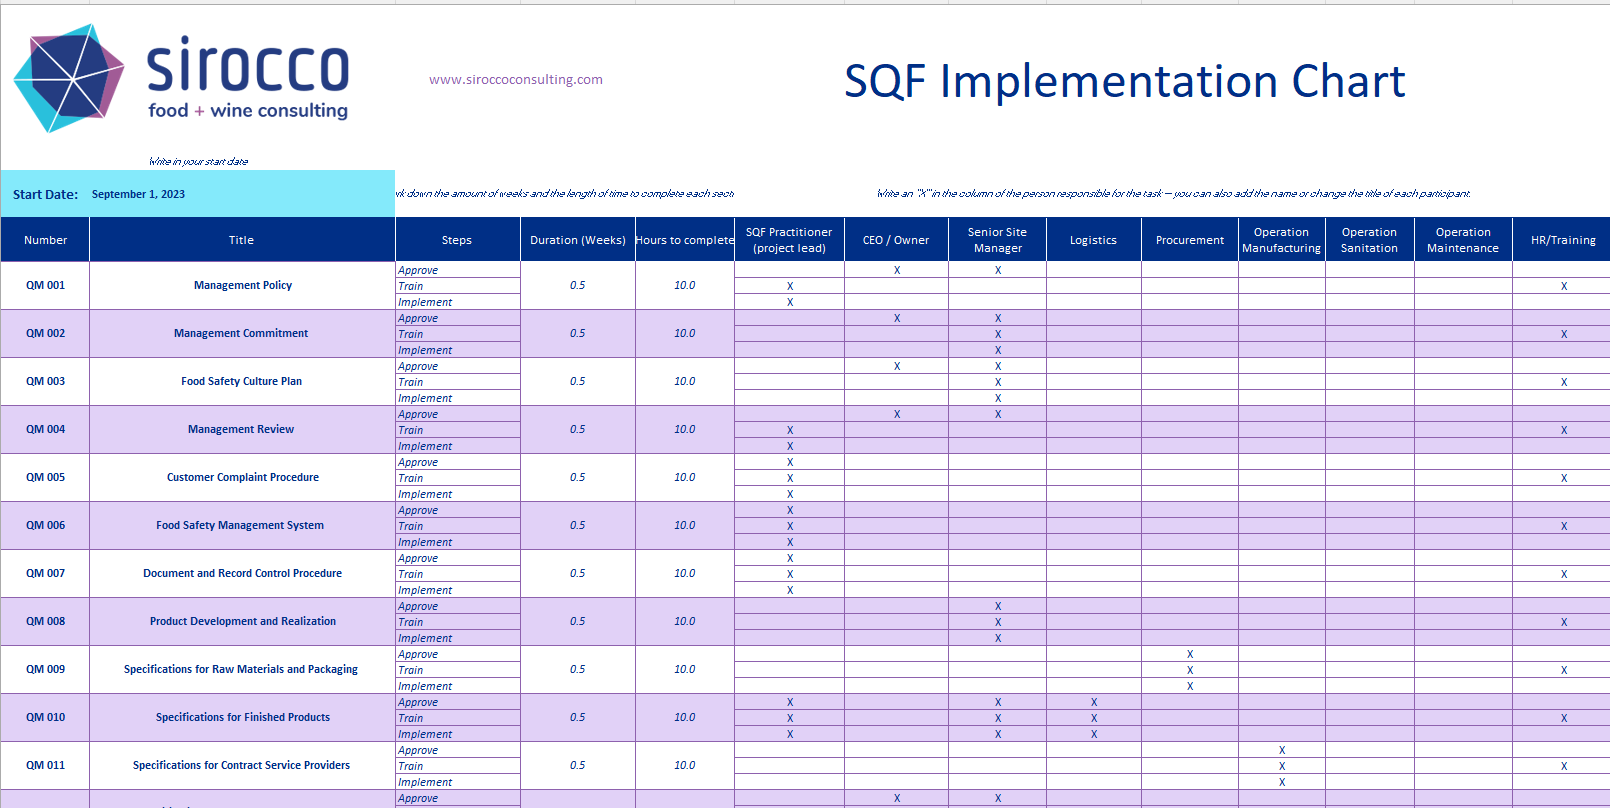 SQF Implementation Process